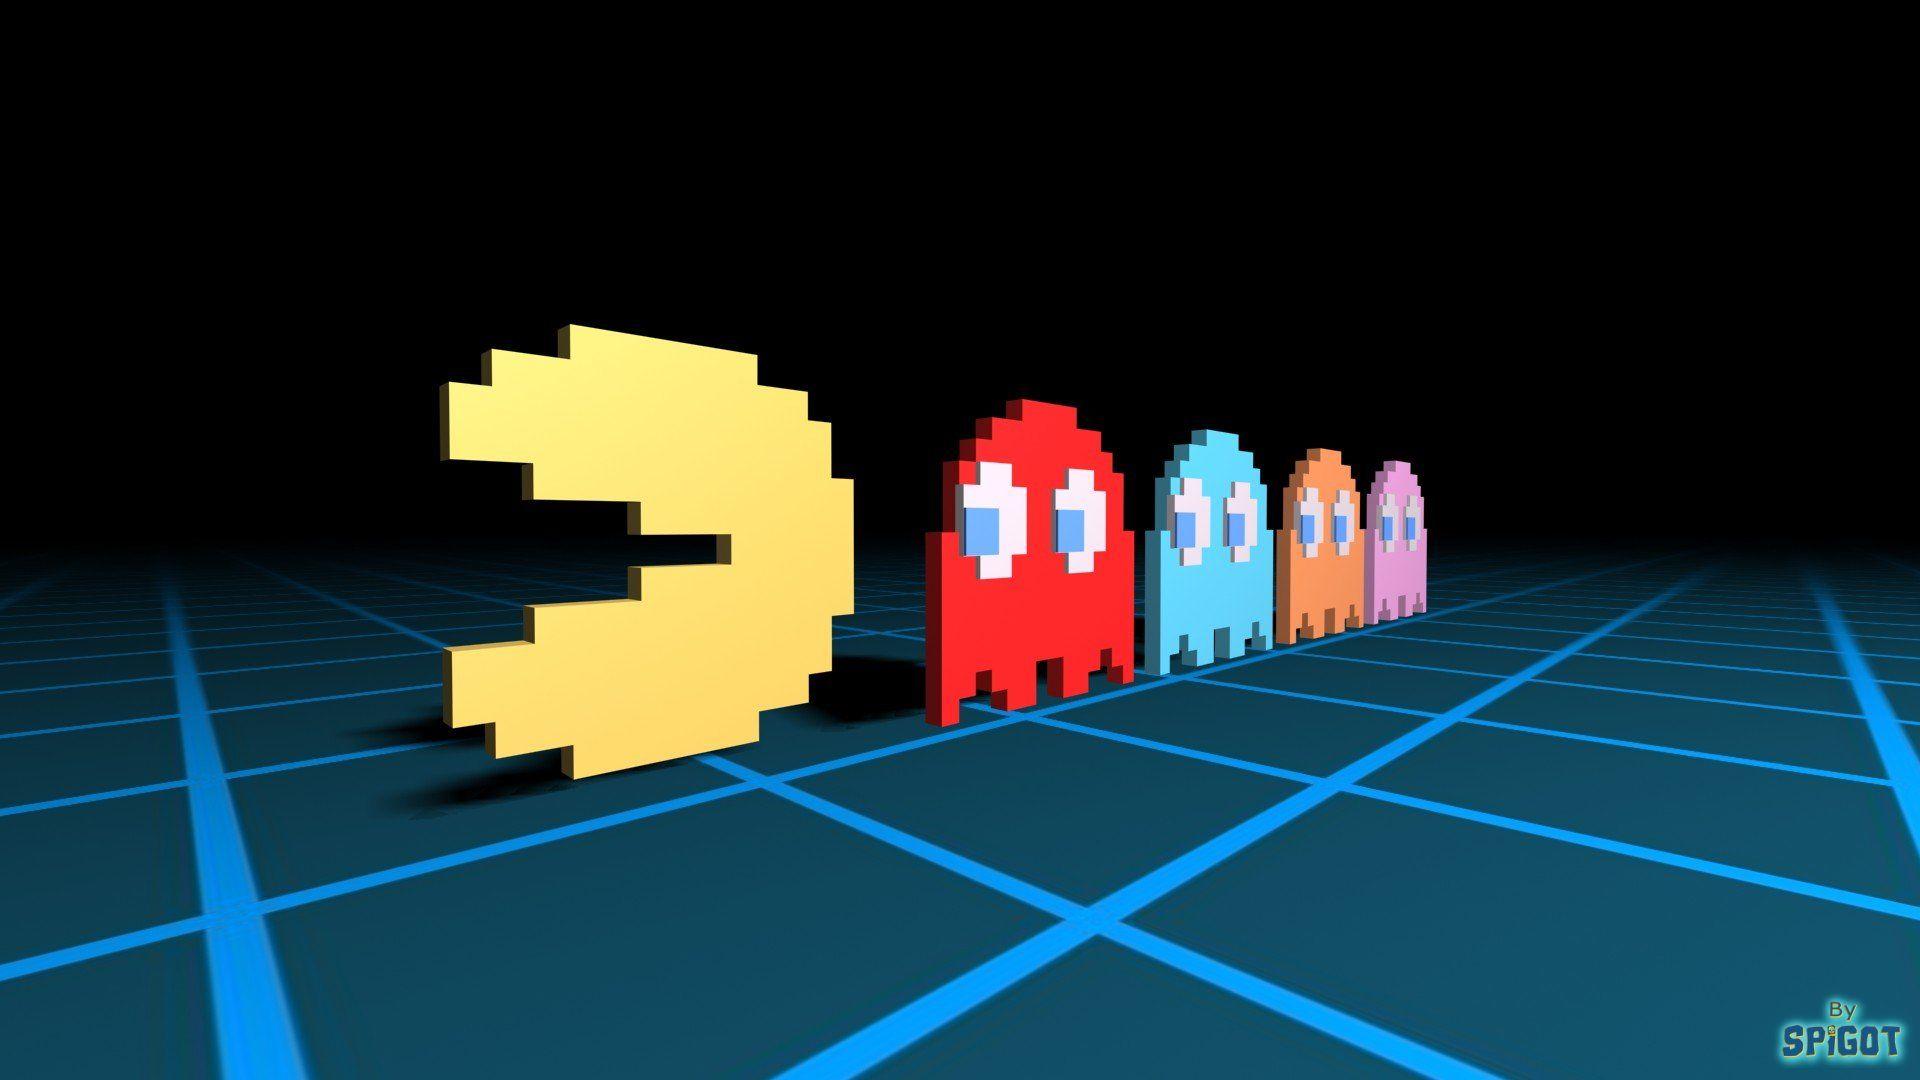 Classic Pacman Wallpaper. George Spigot&;s Blog